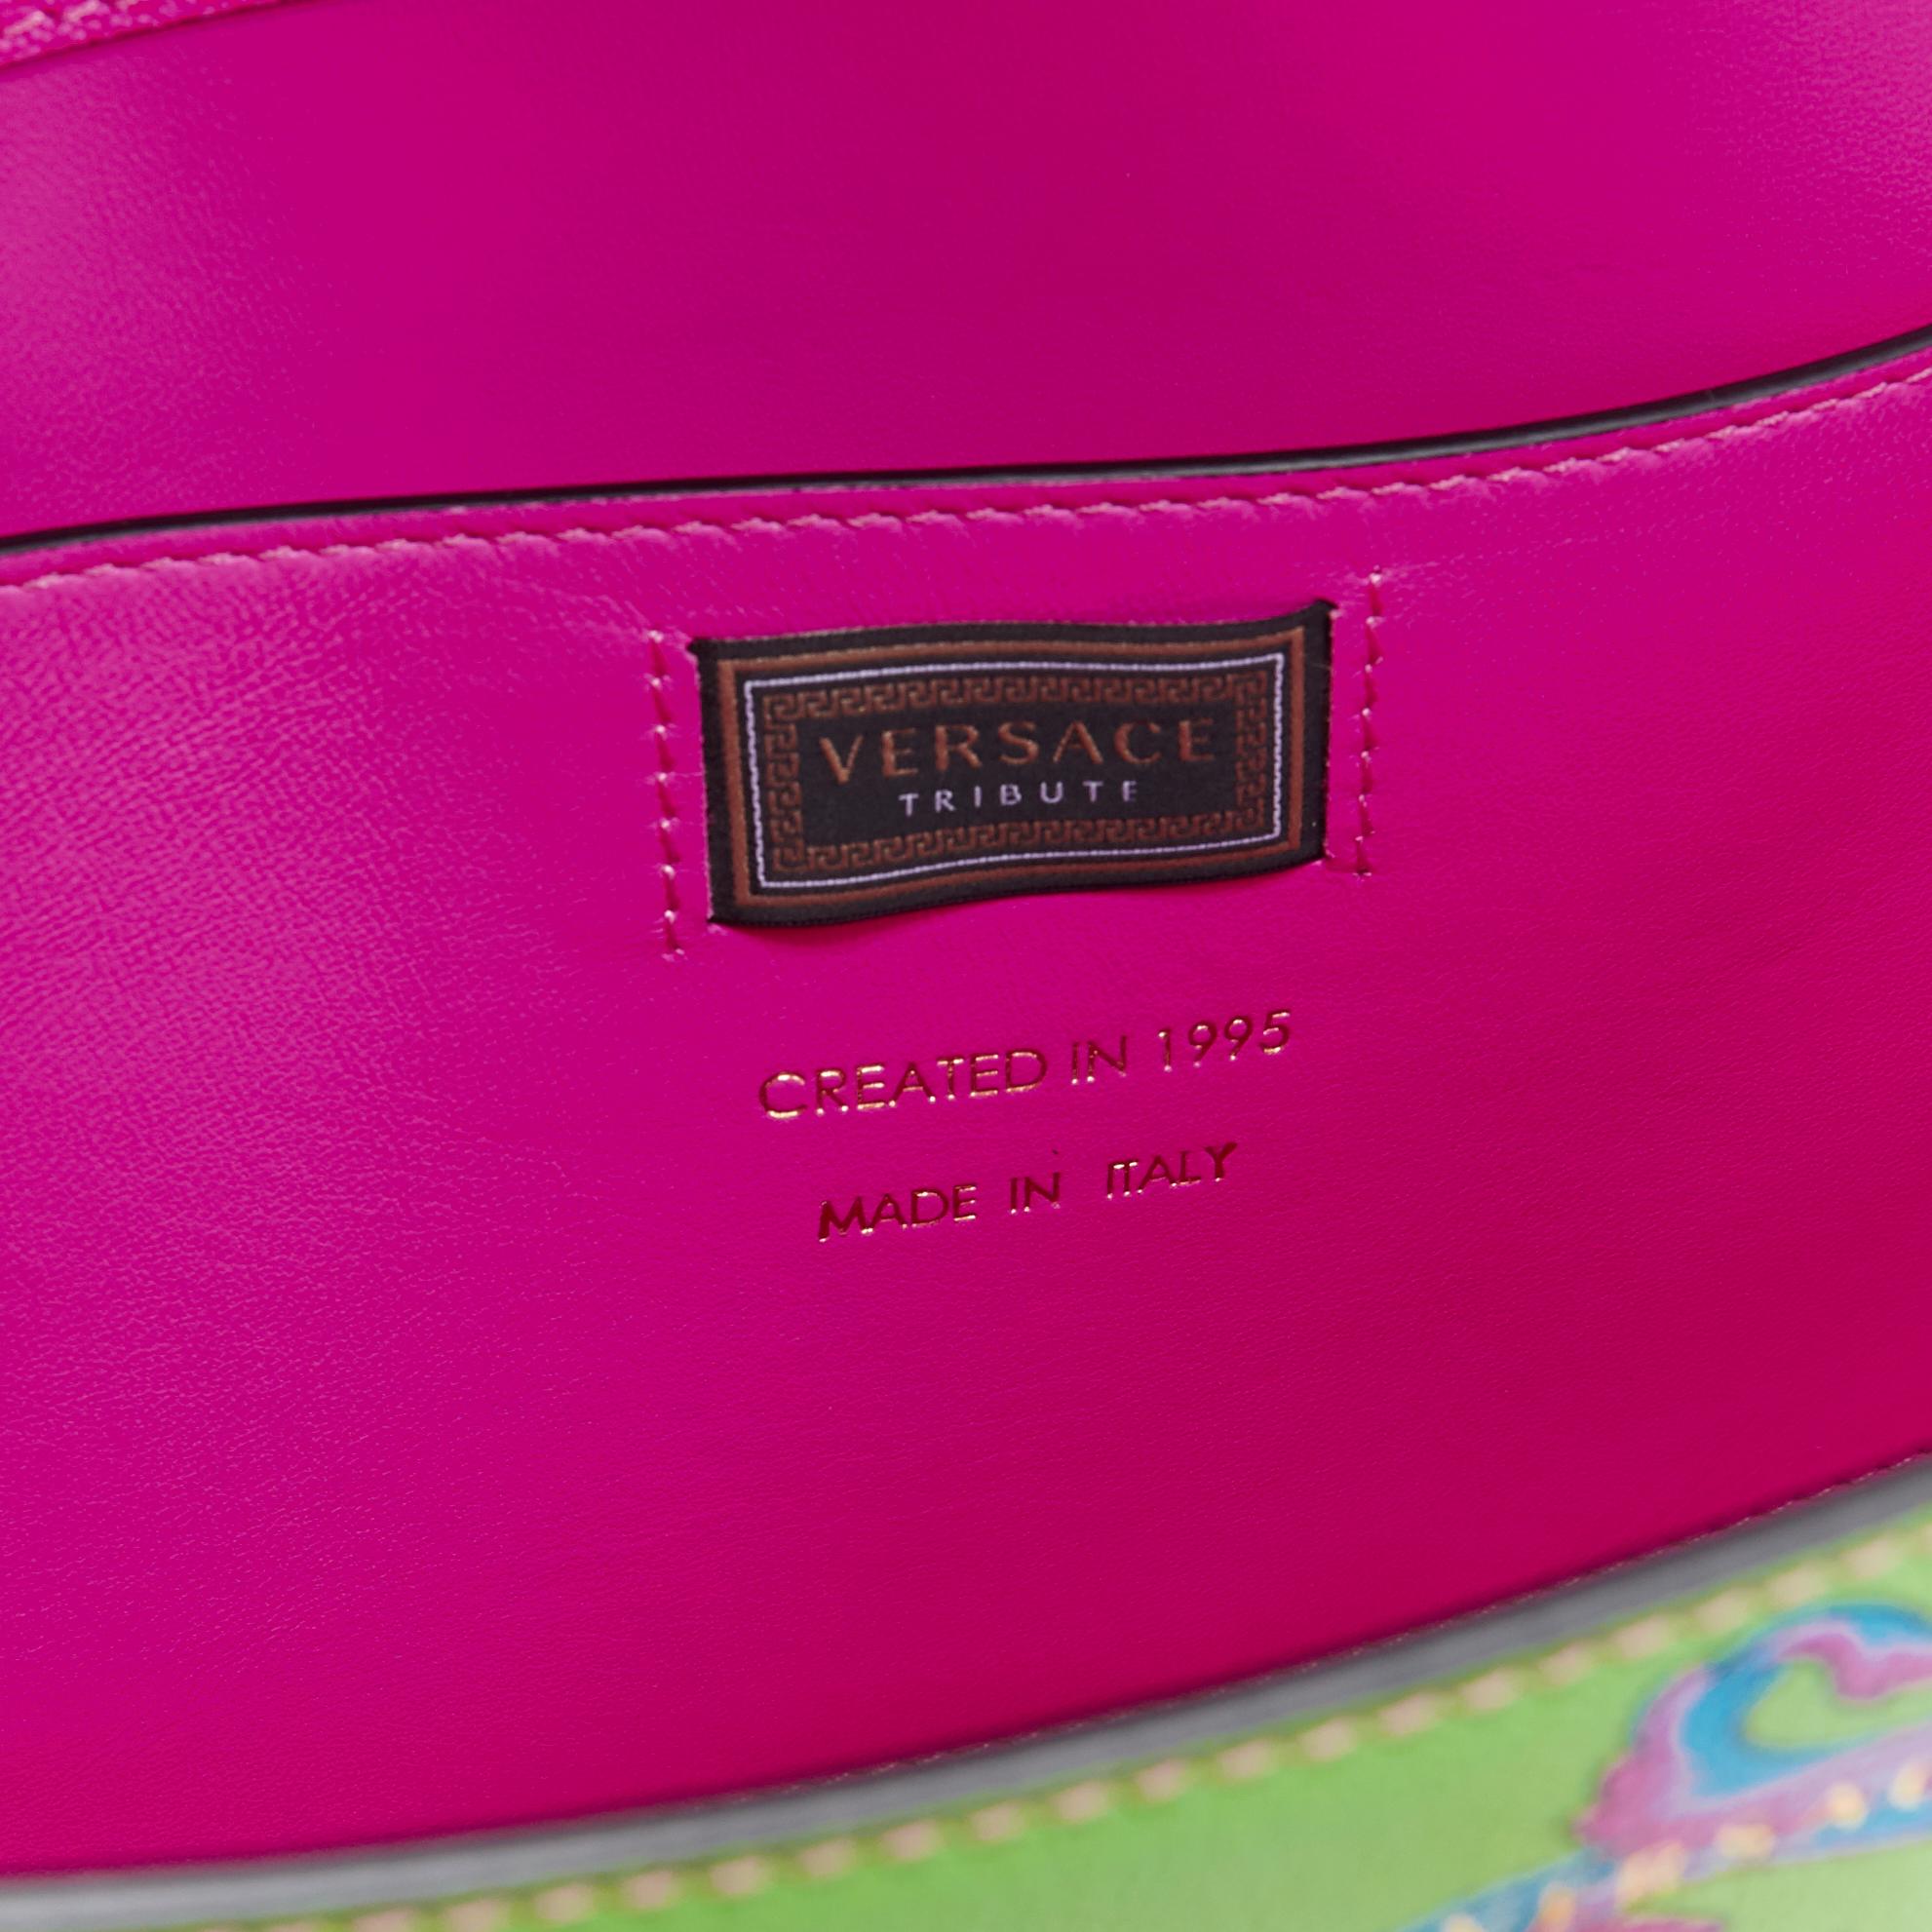 new VERSACE Tribute Diana Technicolor Baroque print top handle Kelly satchel bag 4